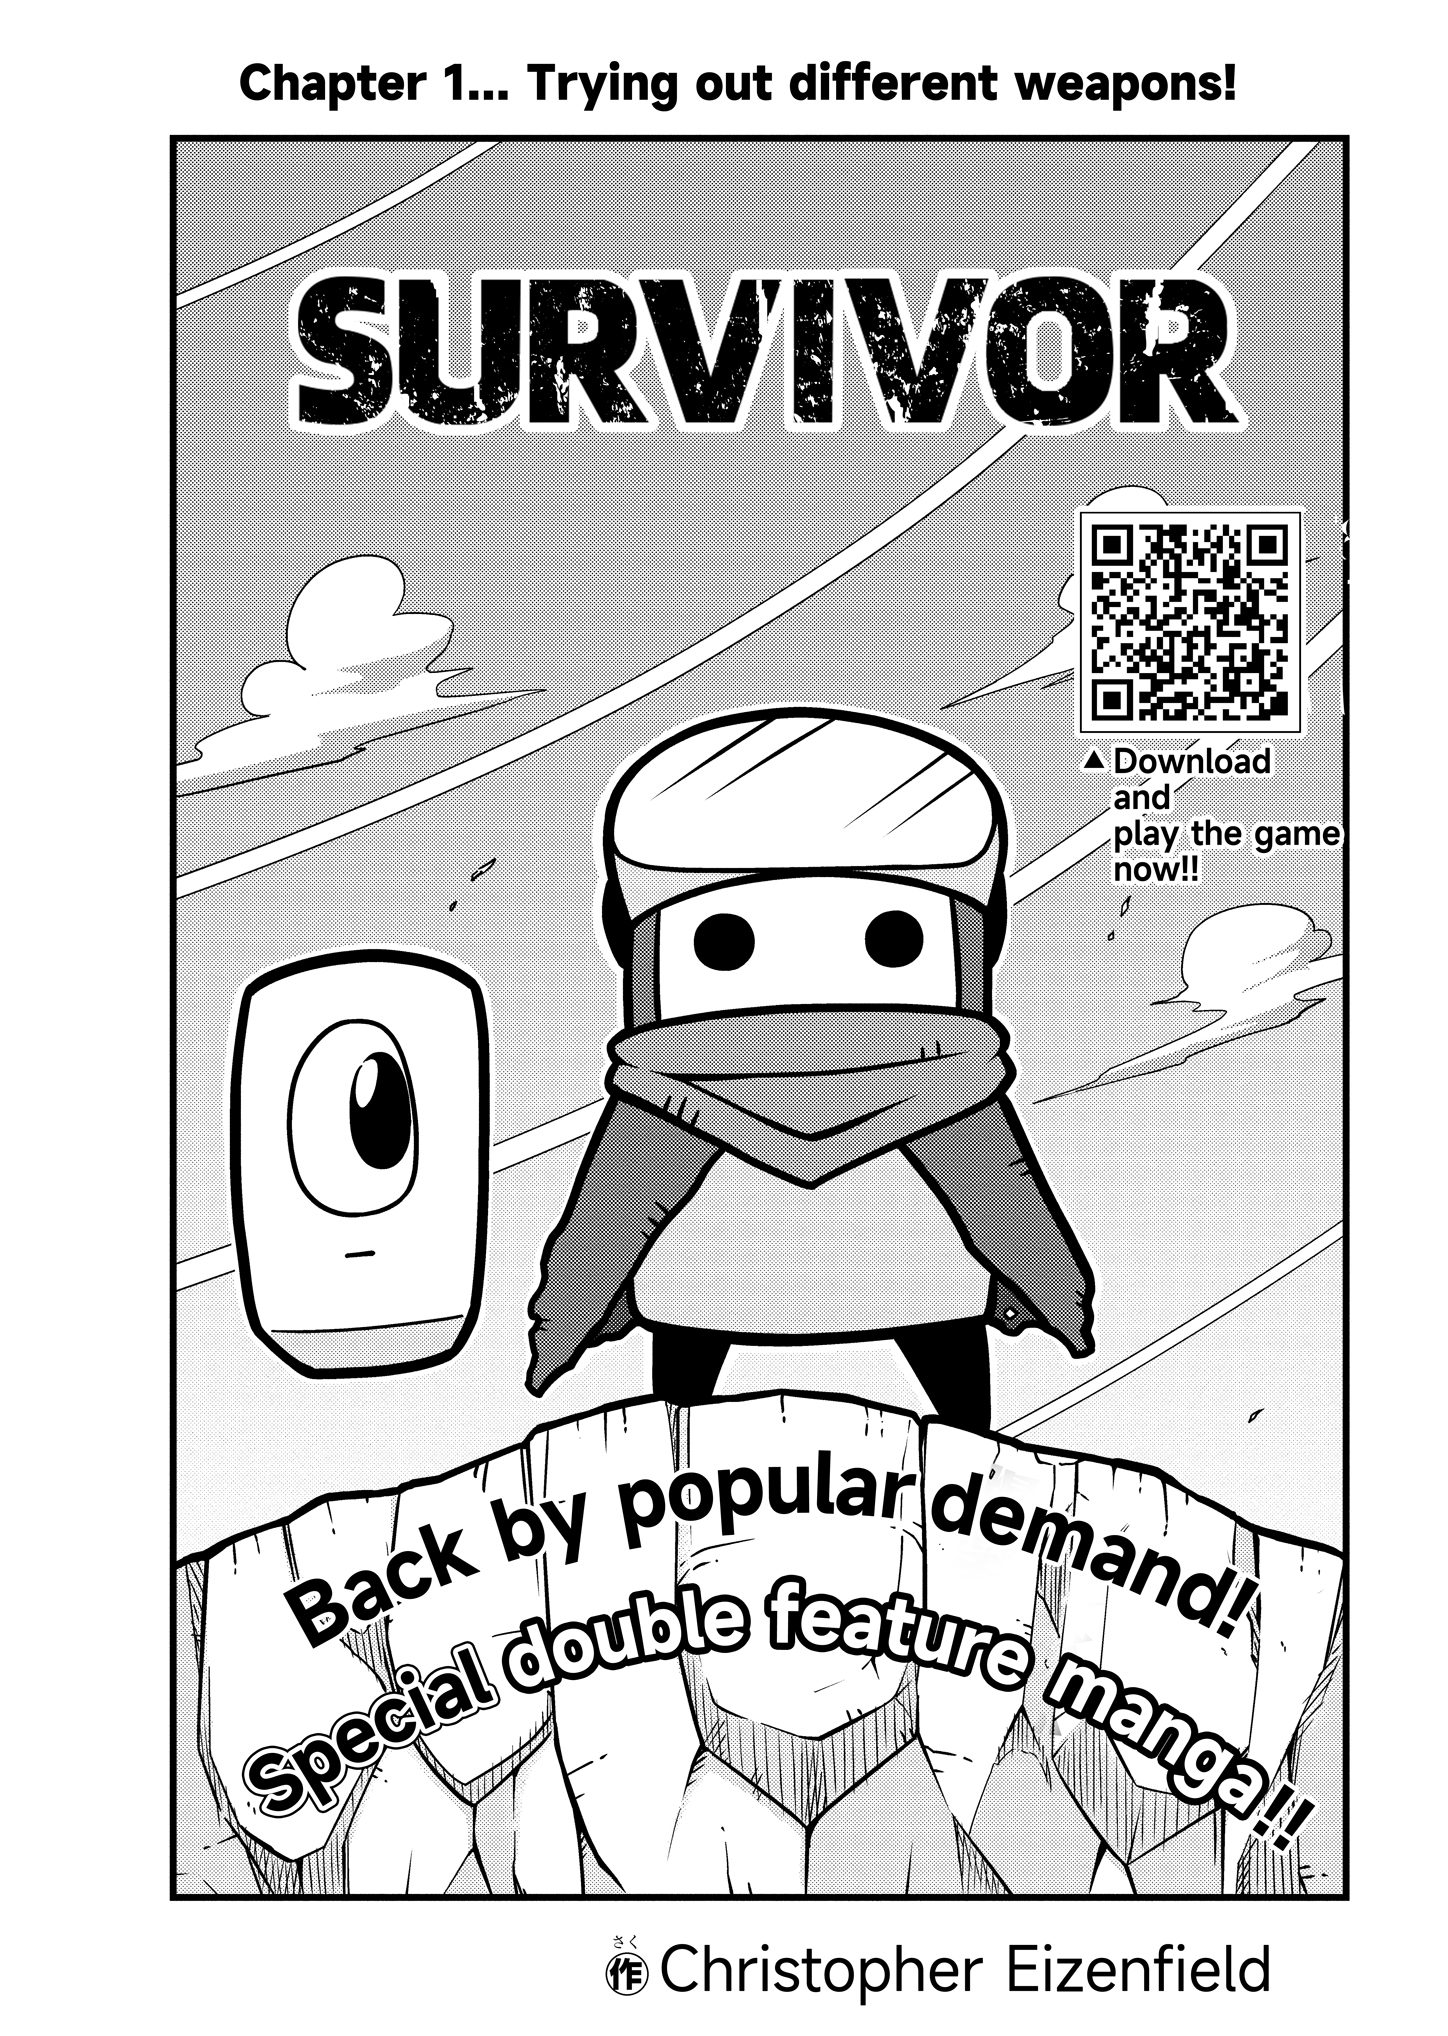 Survivor.io - 🤝Never adventure alone! Introducing the Clan